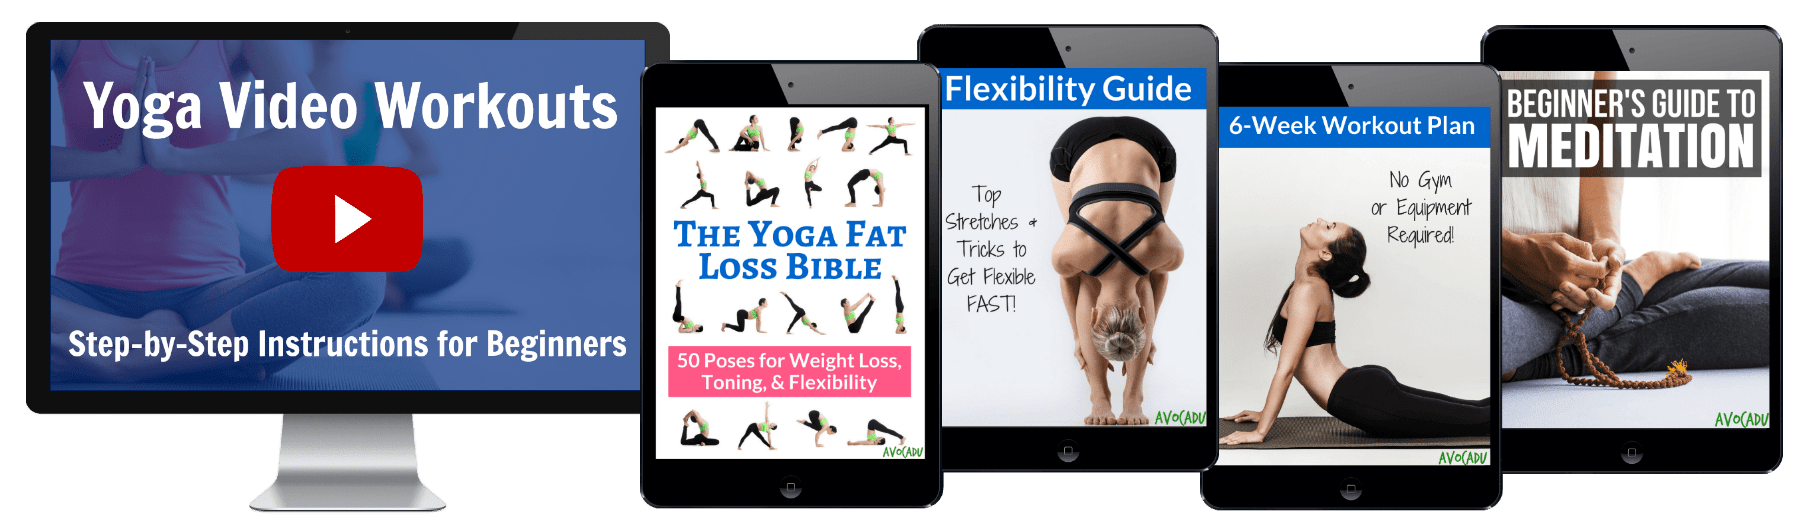 yoga fat loss bible video bundle by avocadu